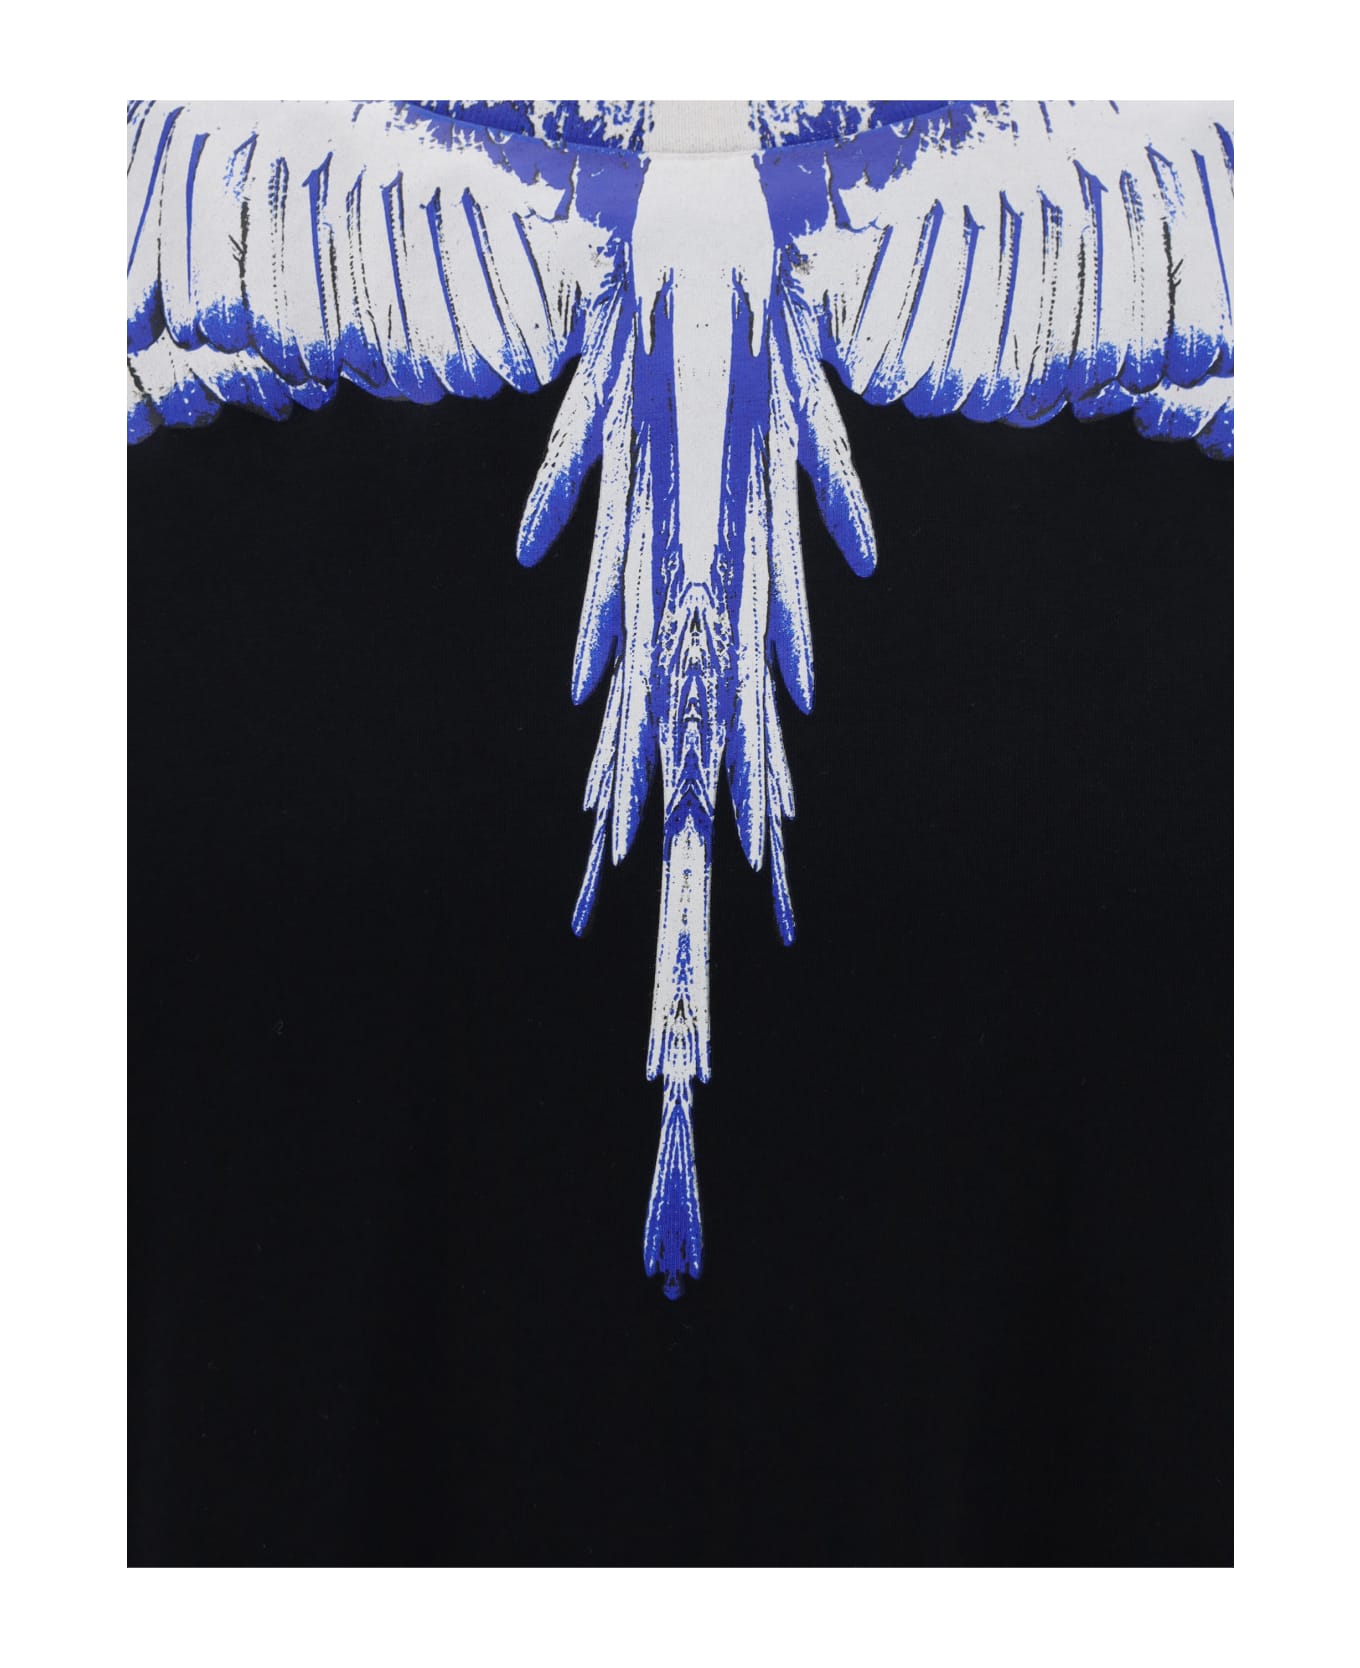 Marcelo Burlon Icon Wings T-shirt - Black White